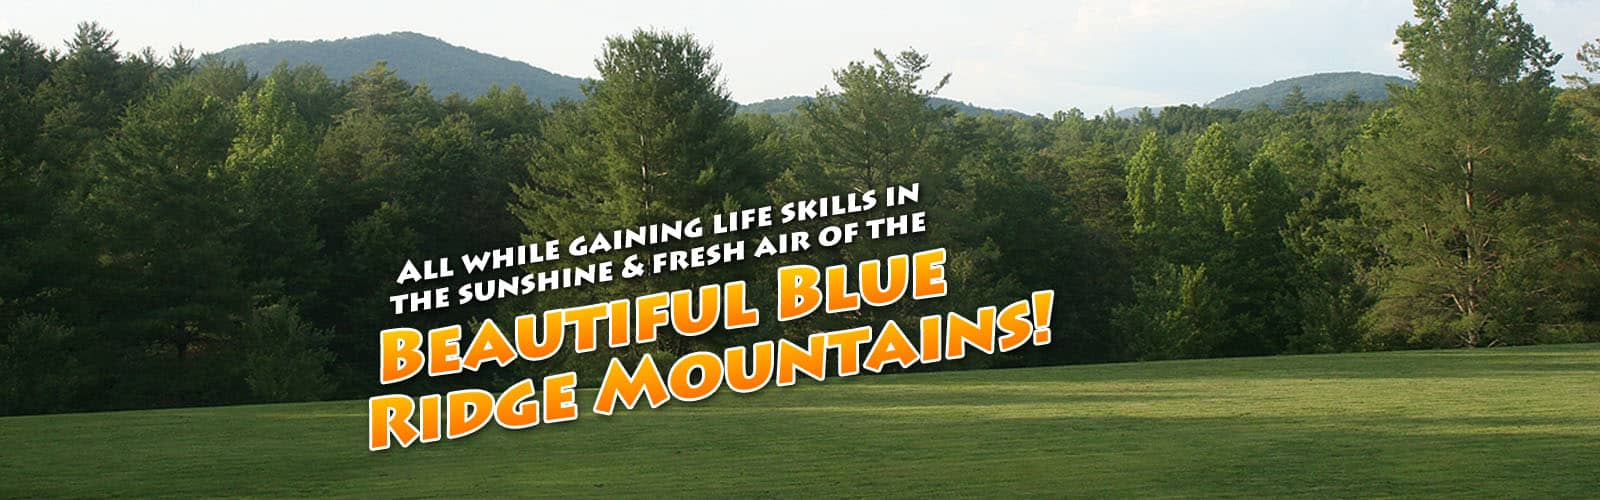 Beautiful blue ridge mountains!